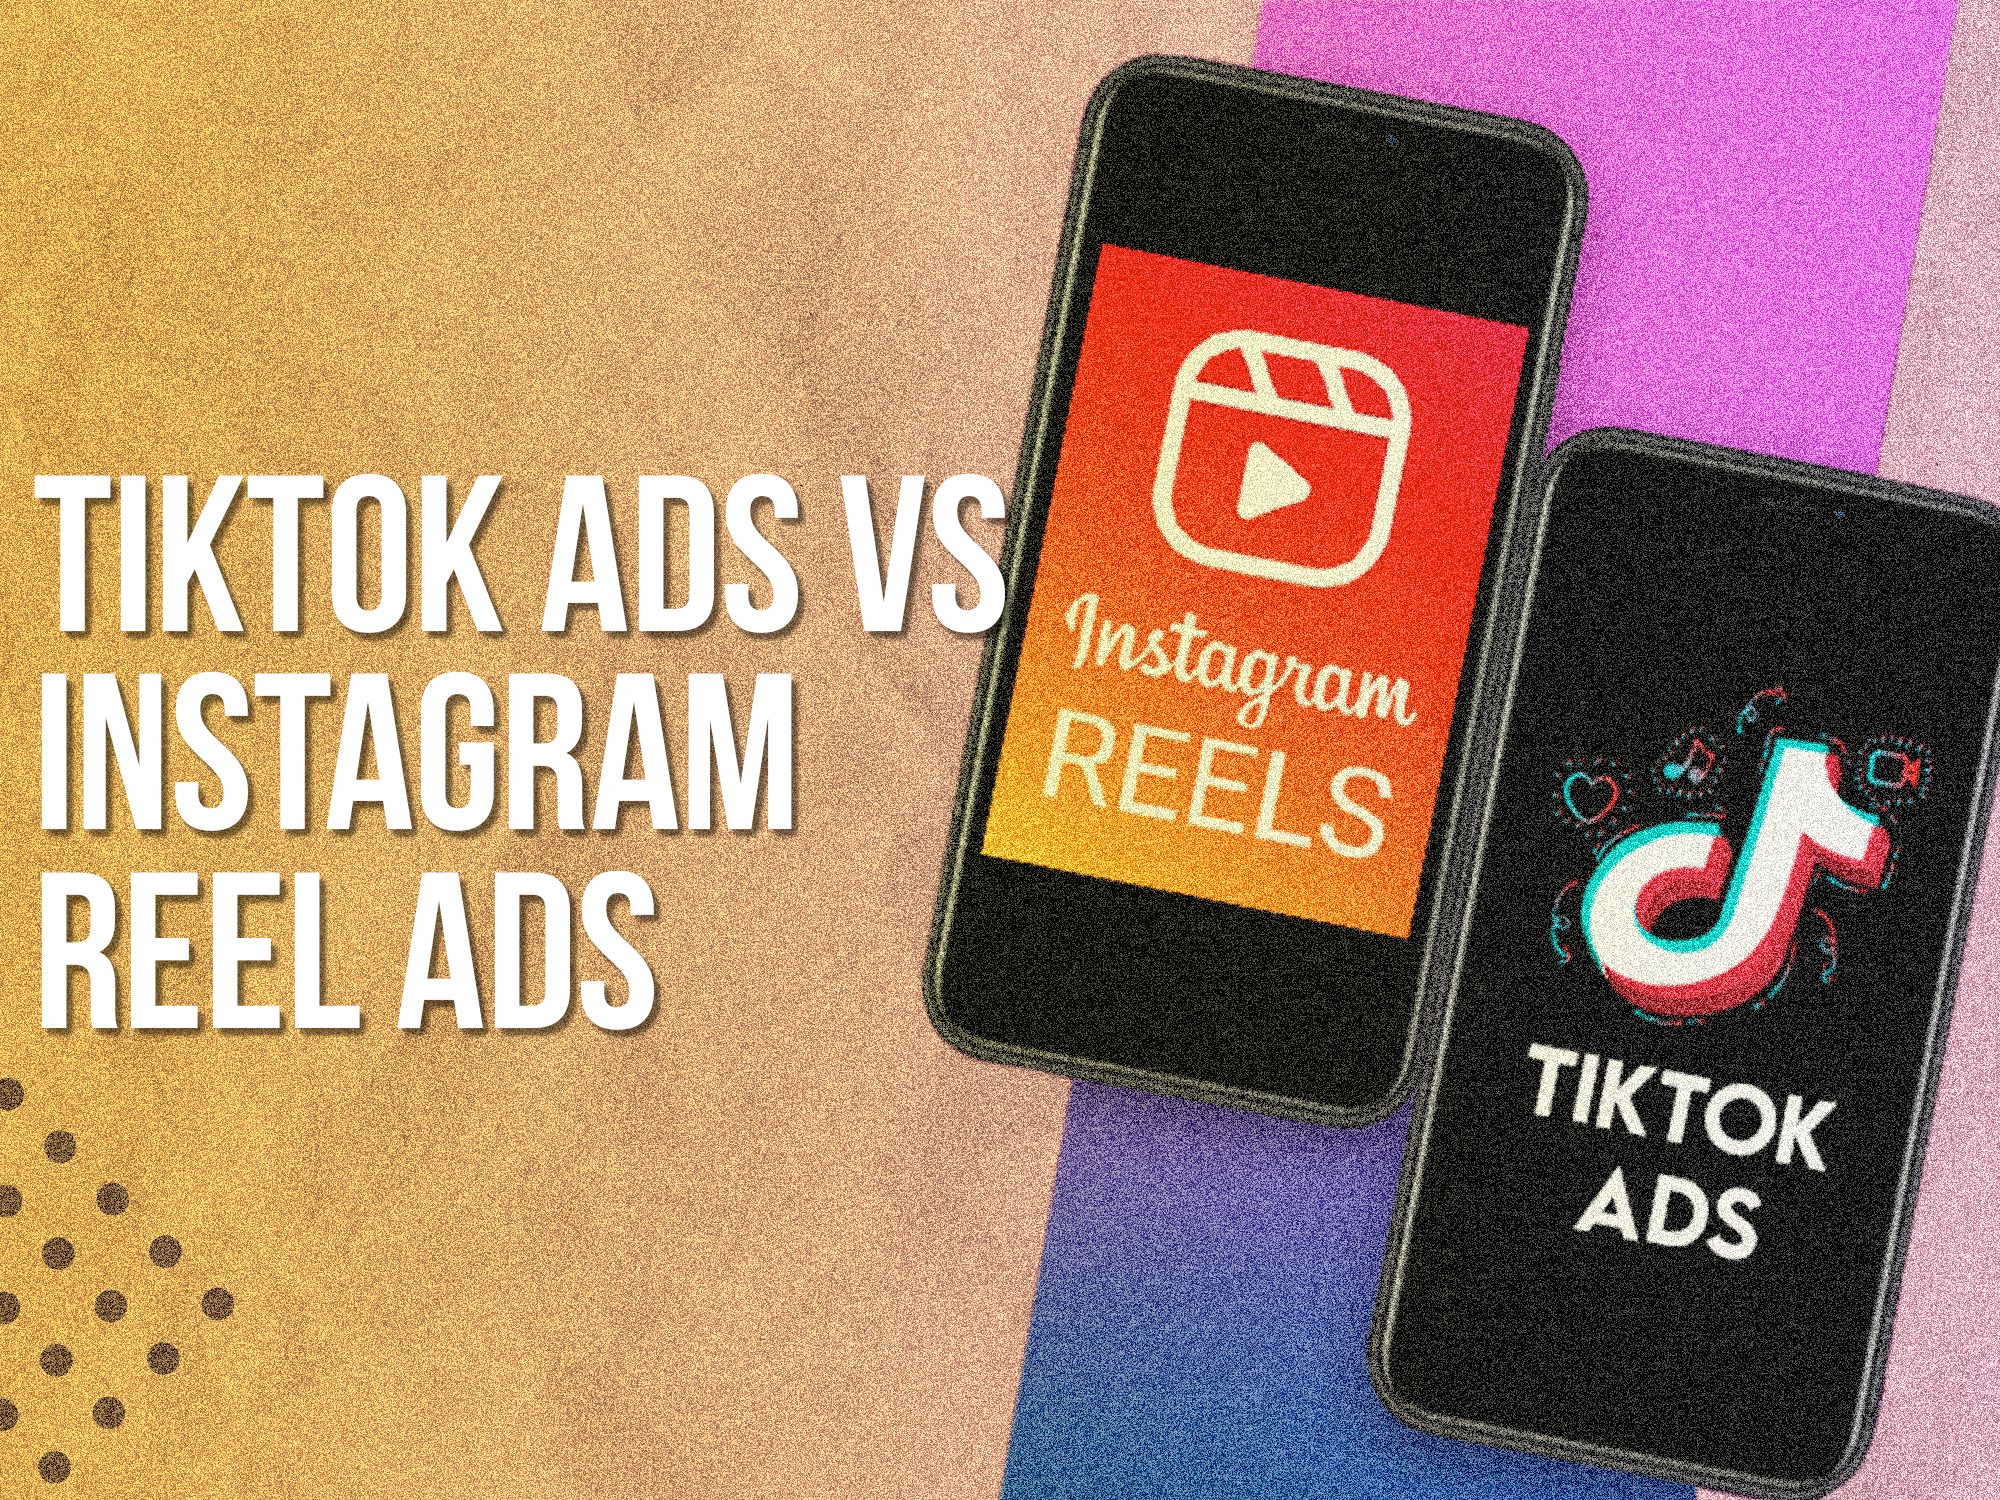 How to Go Viral: Instagram Reels vs TikTok vs  Shorts